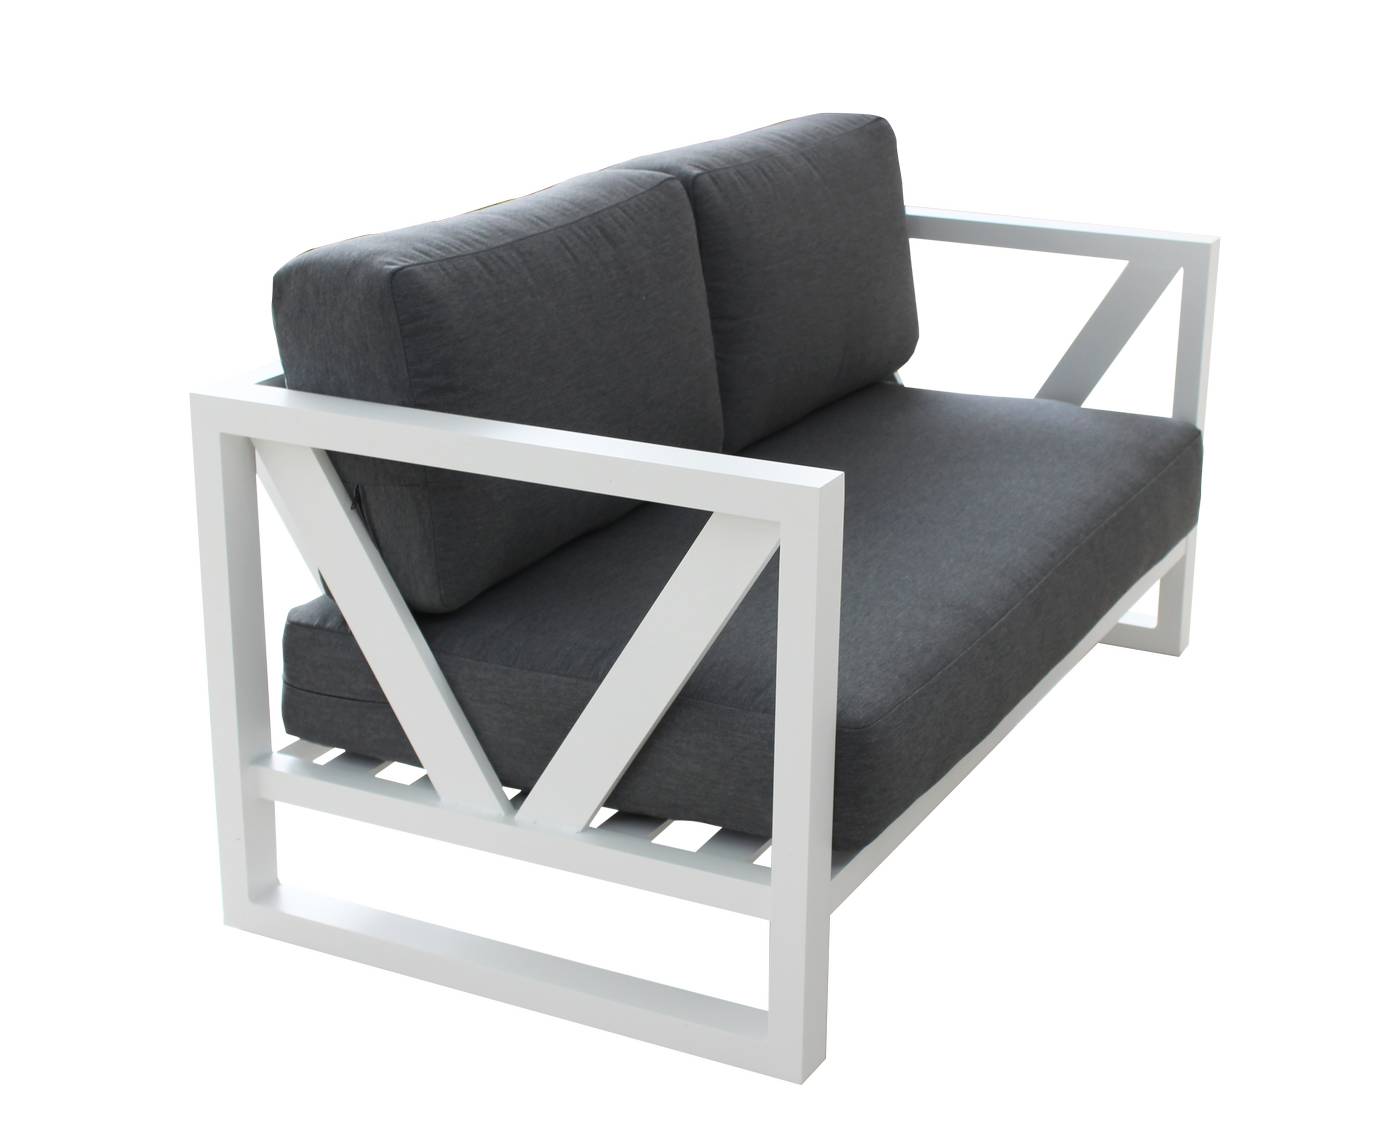 Set Aluminio Luxe Ventus-9 - Lujoso conjunto de aluminio: sofá 2 plazas + 2 sillones + mesa de centro + 2 taburetes. Color conjunto: blanco, antracita, champagne, plata o marrón.